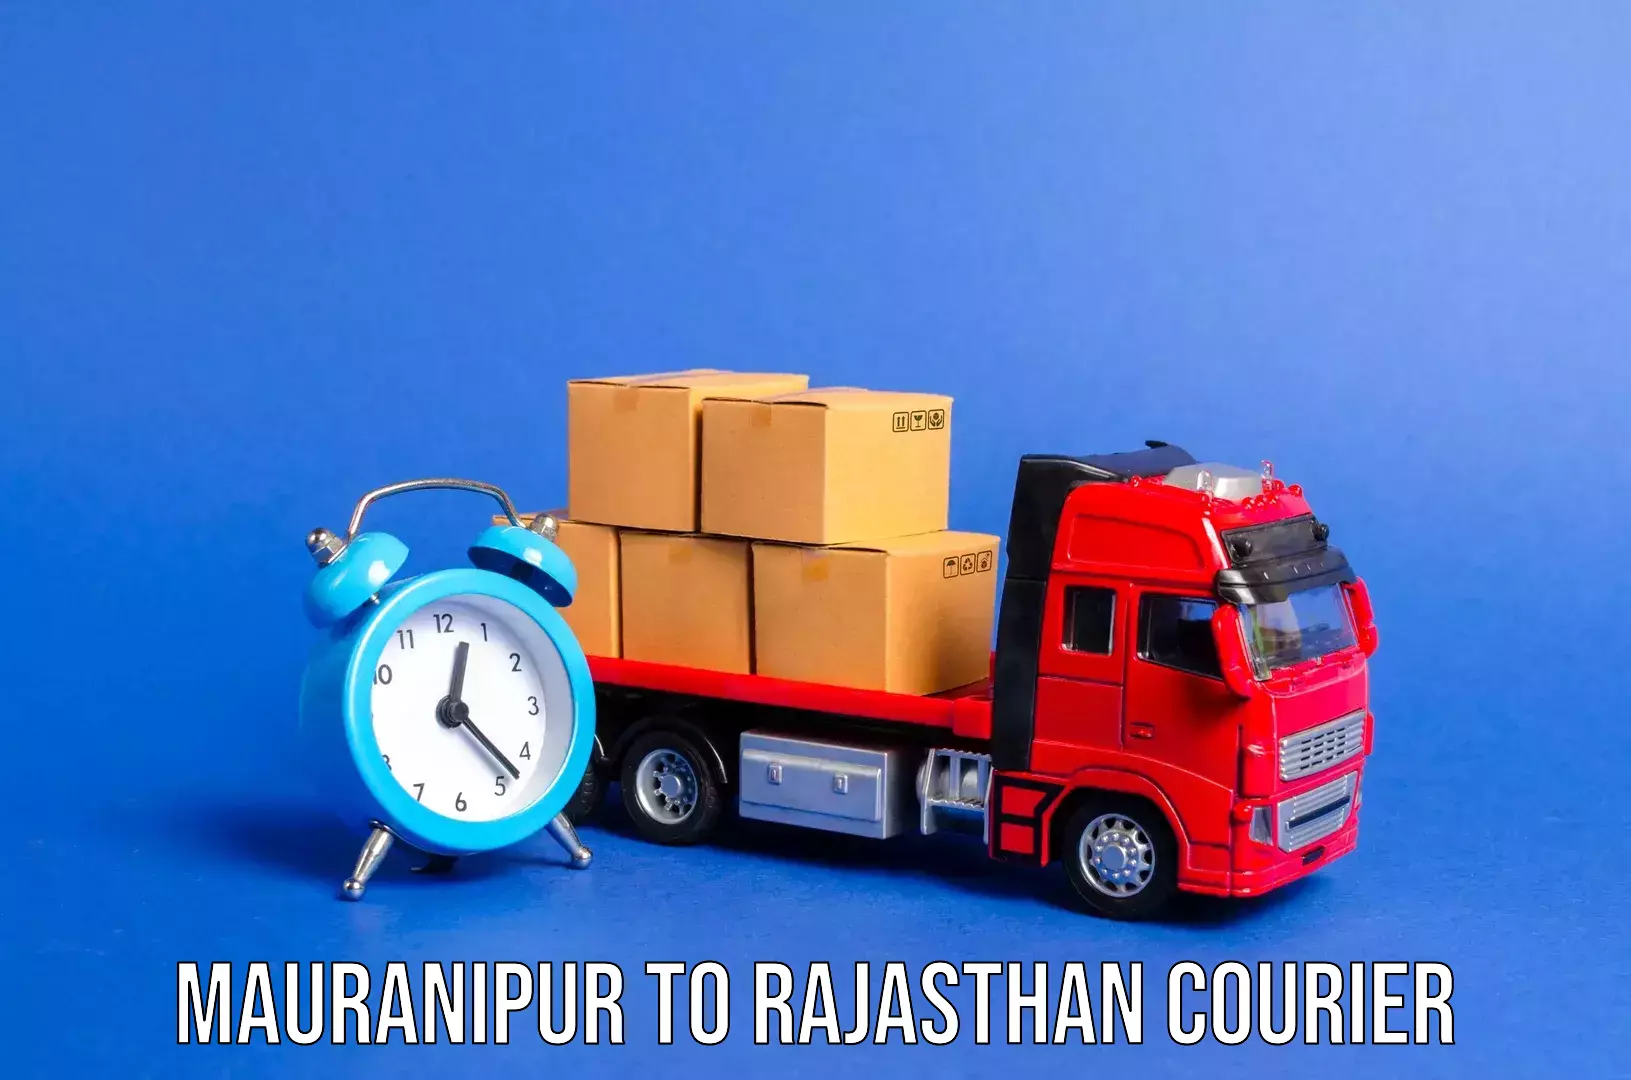 Luggage forwarding service Mauranipur to Pokhran